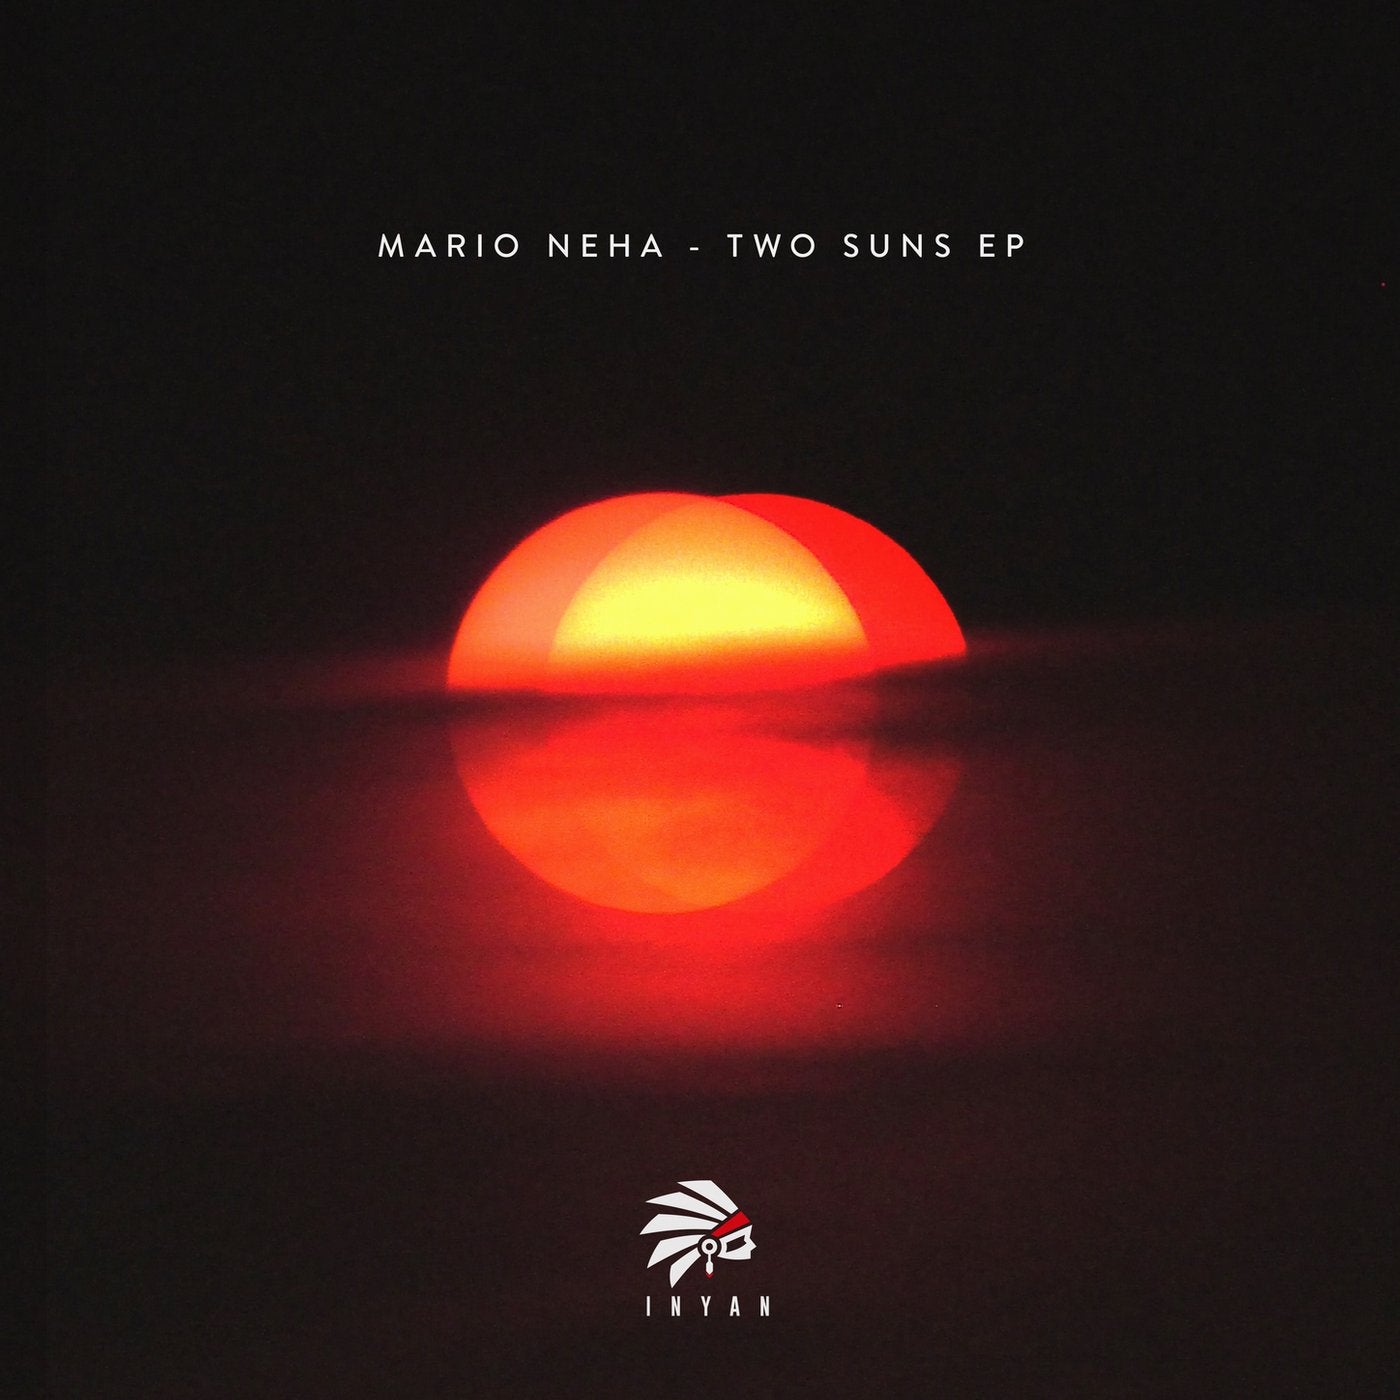 Two Suns EP (Mario Neha)